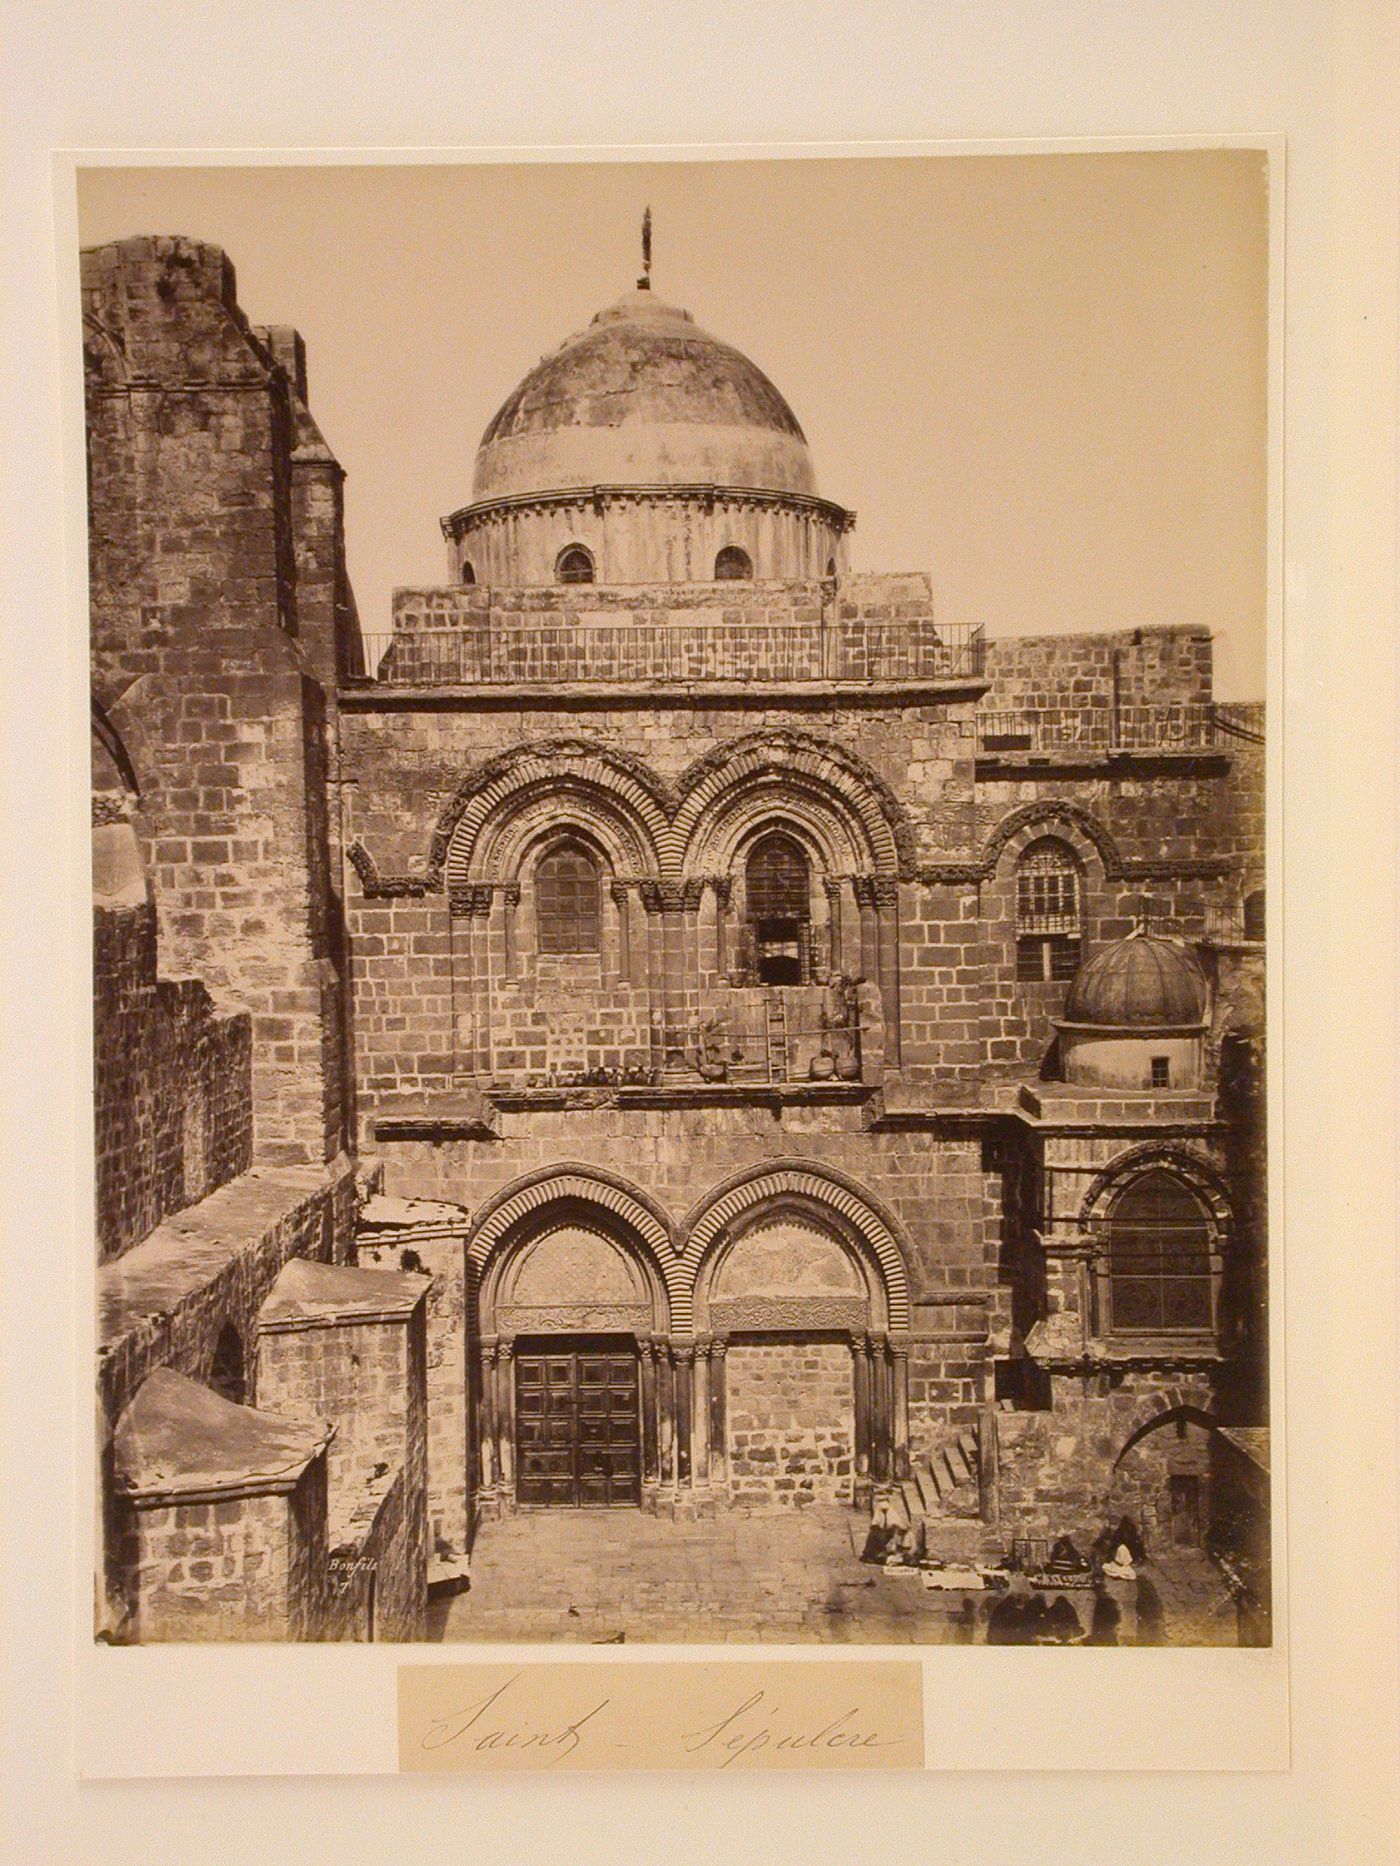 Façade of the Church of the Holy Sepulchre, Jerusalem, Palestine